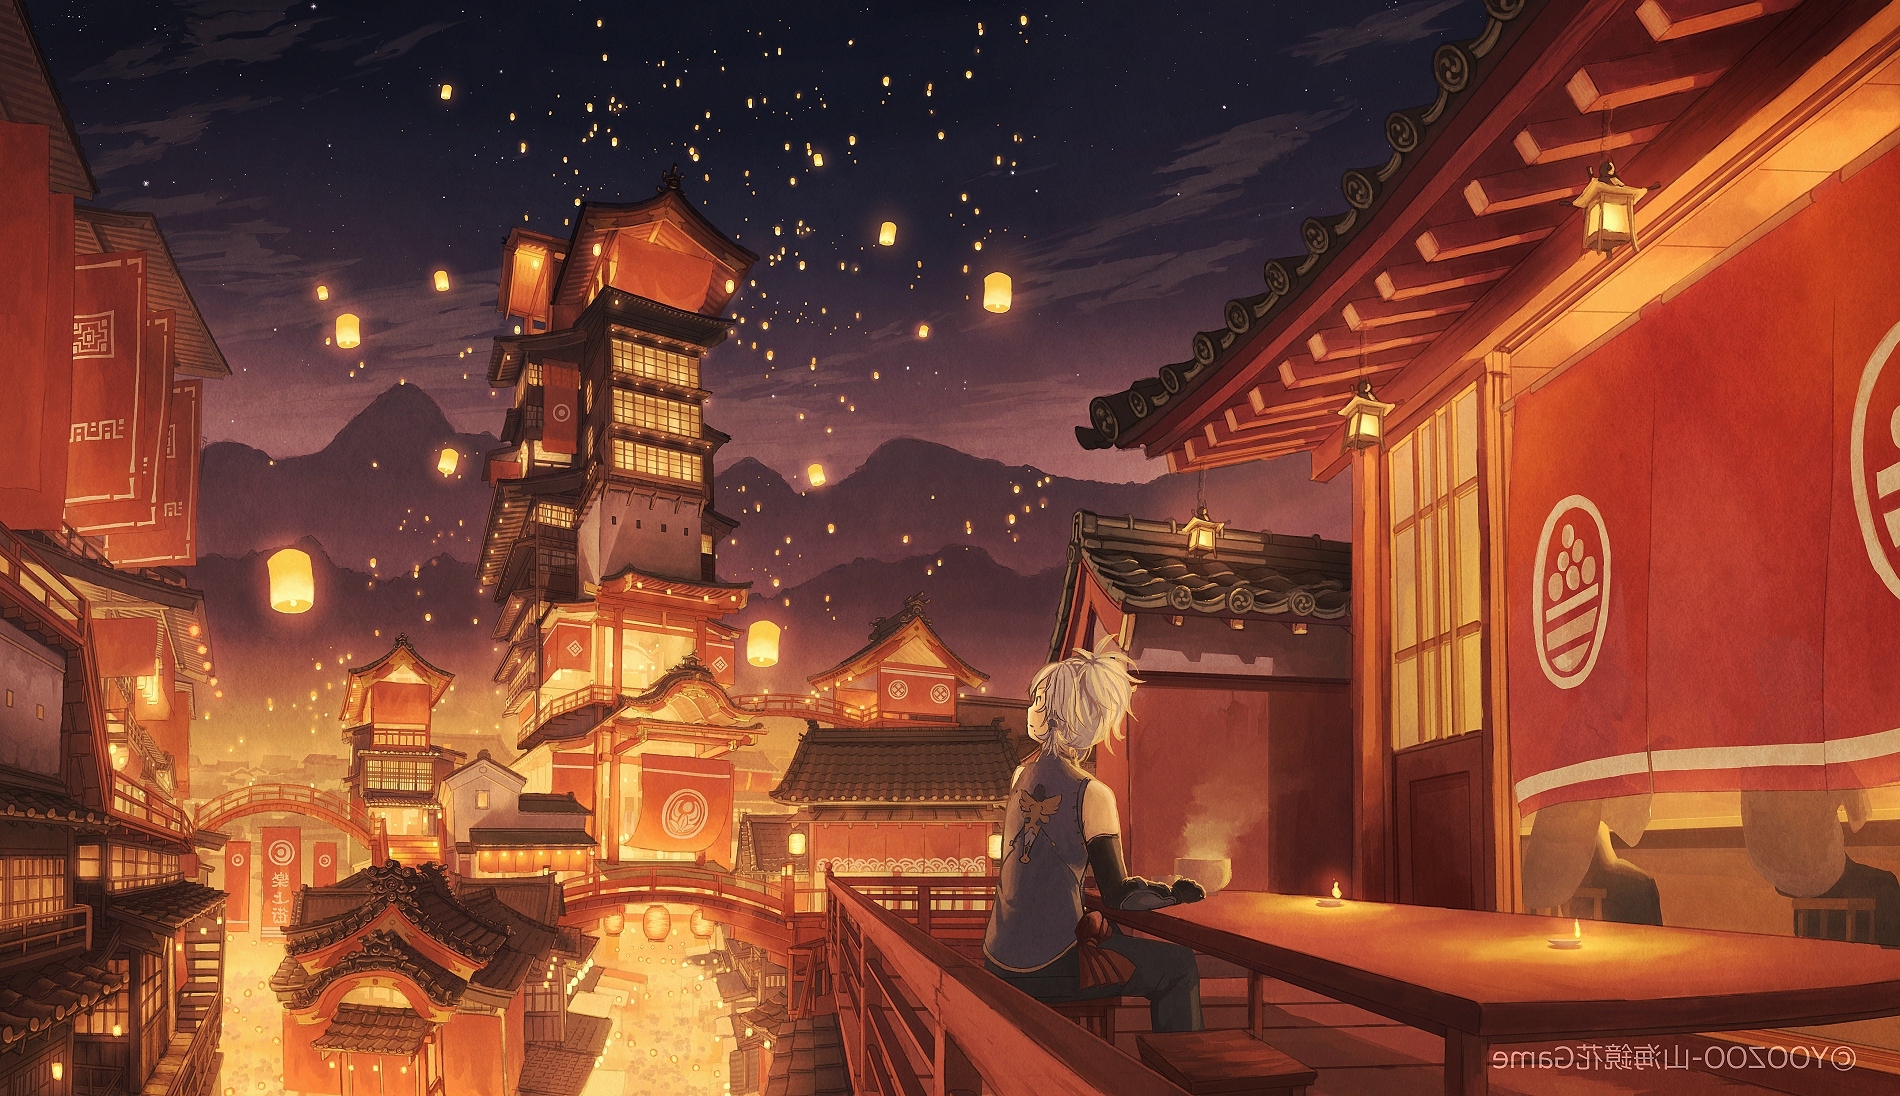 Wallpaper Boy Lanterns Anime Festival Traditional Buildings